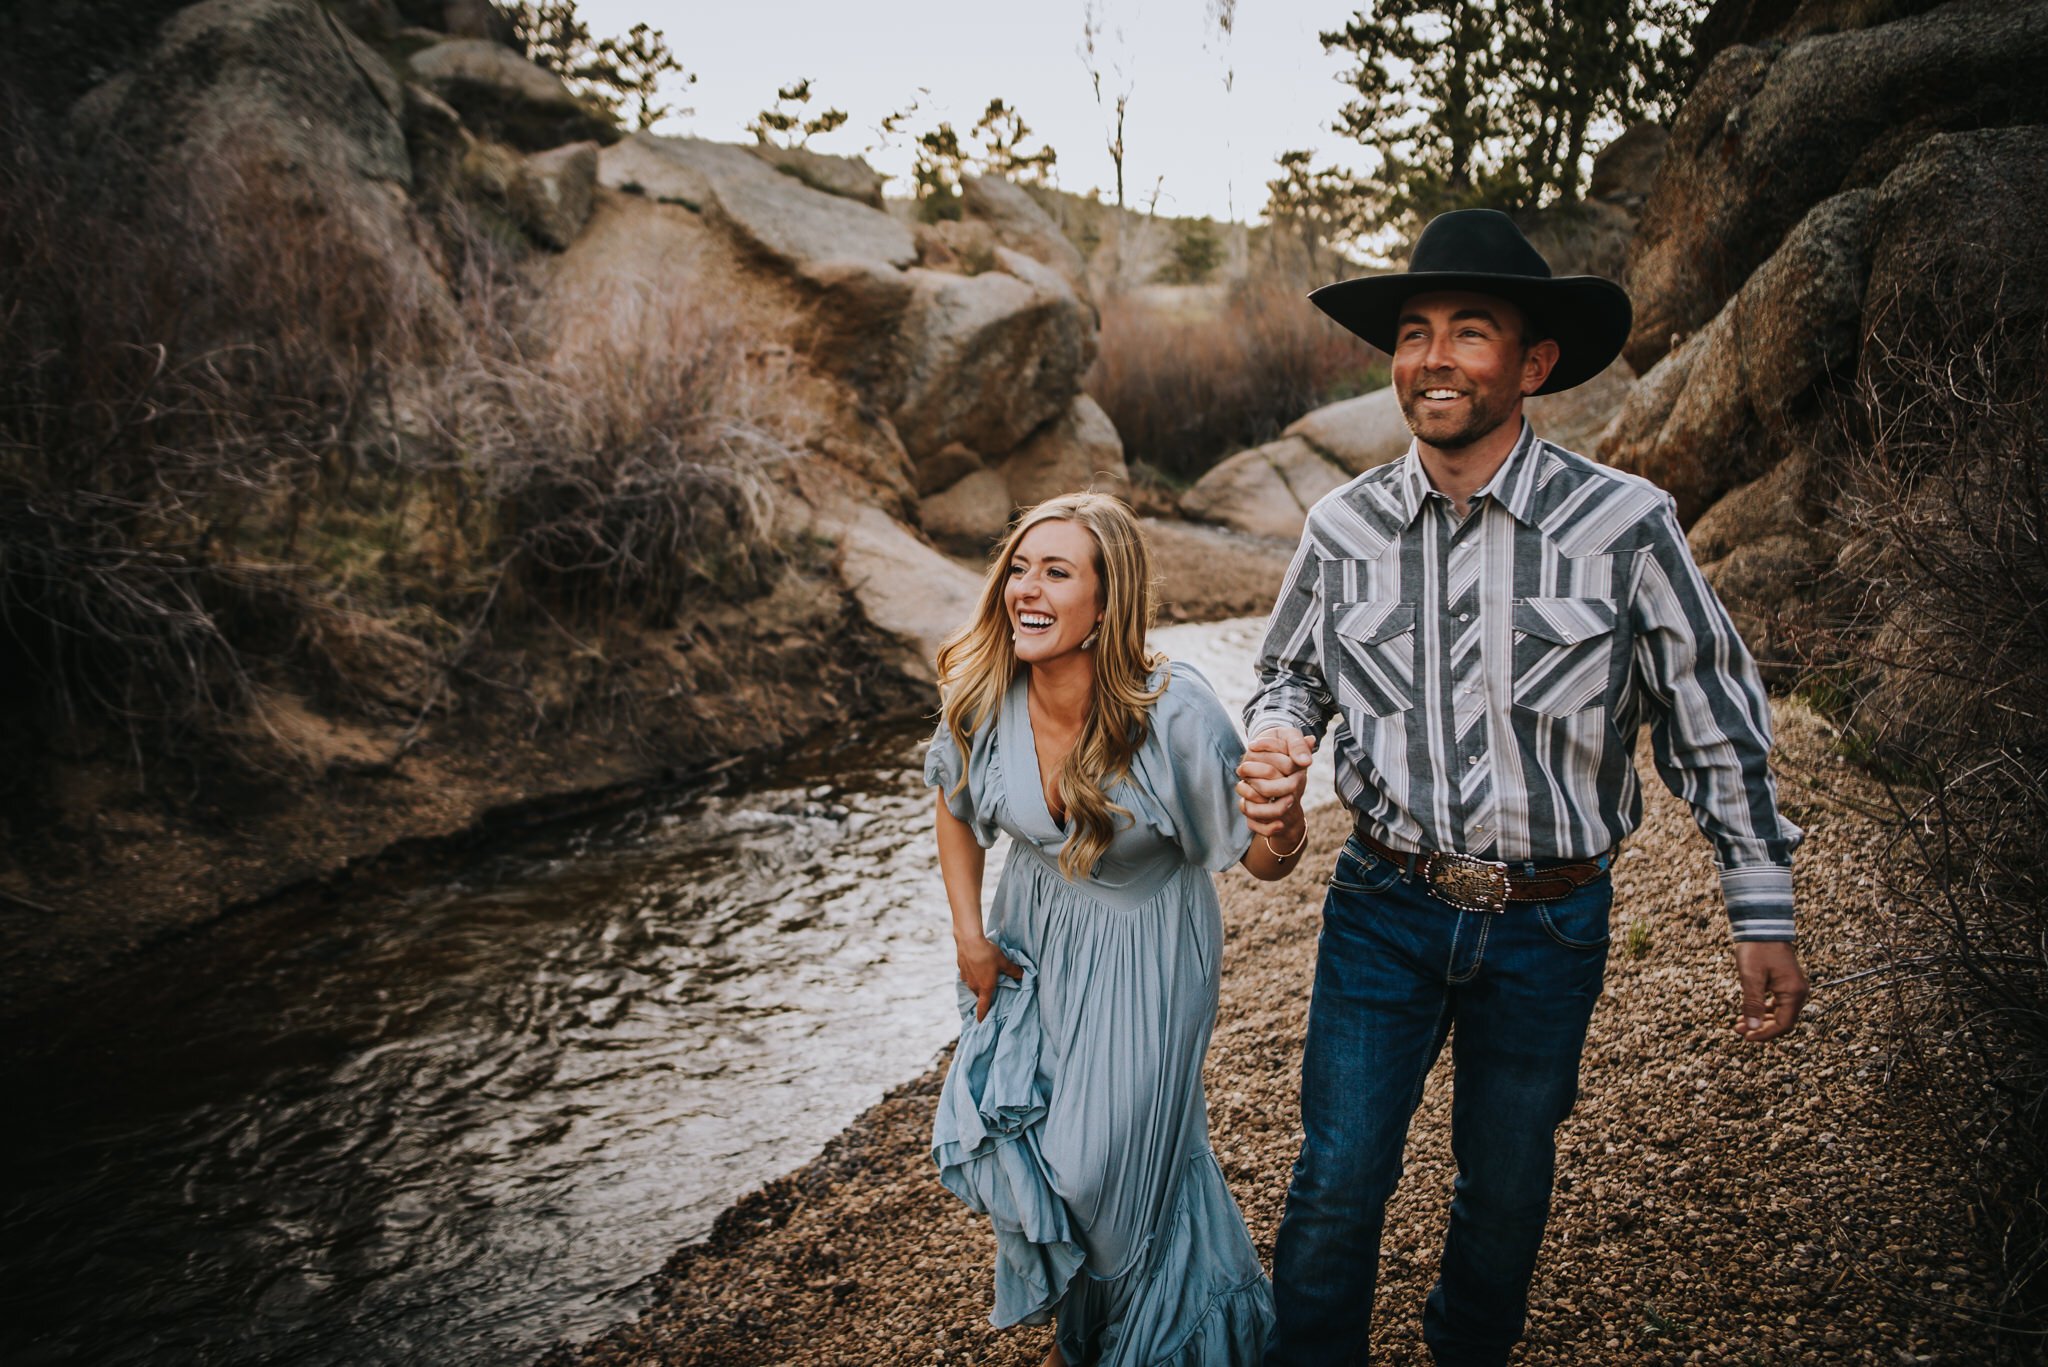 Shelby+and+Brady+Engagement+Session+Cheyenne+Wyoming+Sunset+Water+Fields+Rocks+Nature+Colorado+Photographer+Wild+Prairie+Photography-18-2020.jpeg